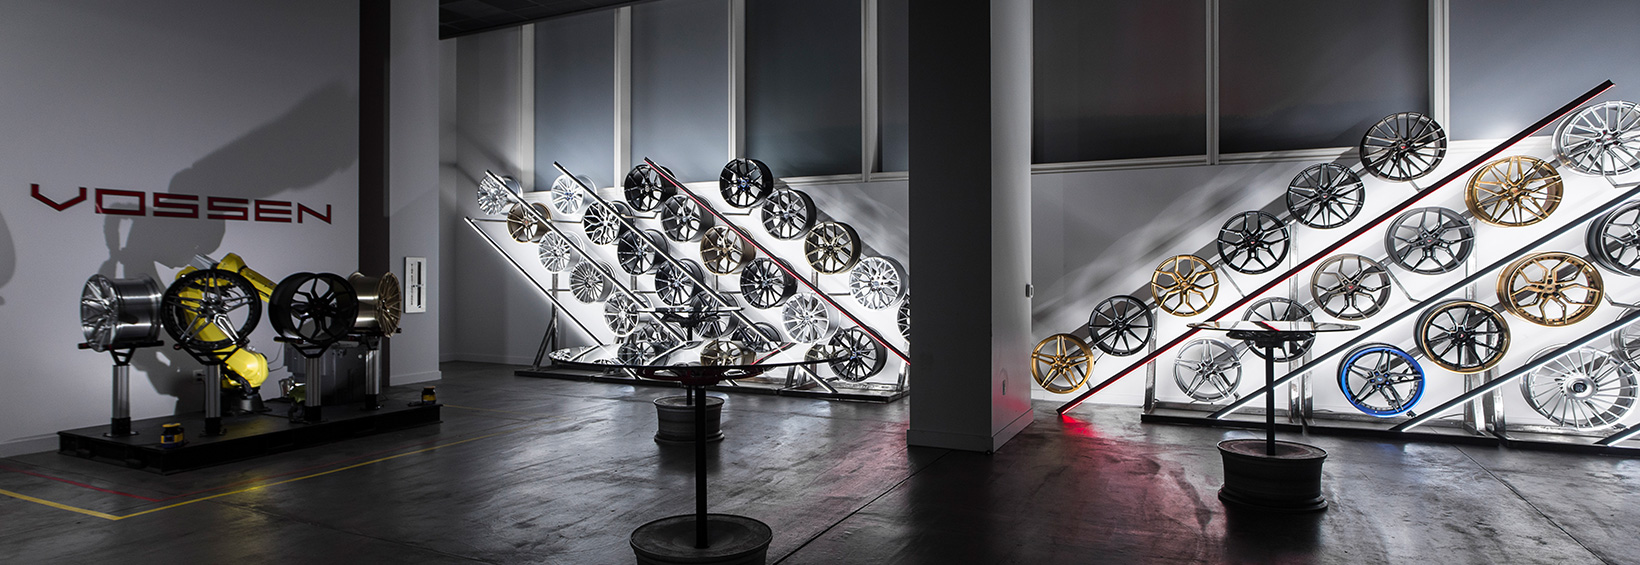 Vossen Wheels Luxury Performance Forged Wheels Flow